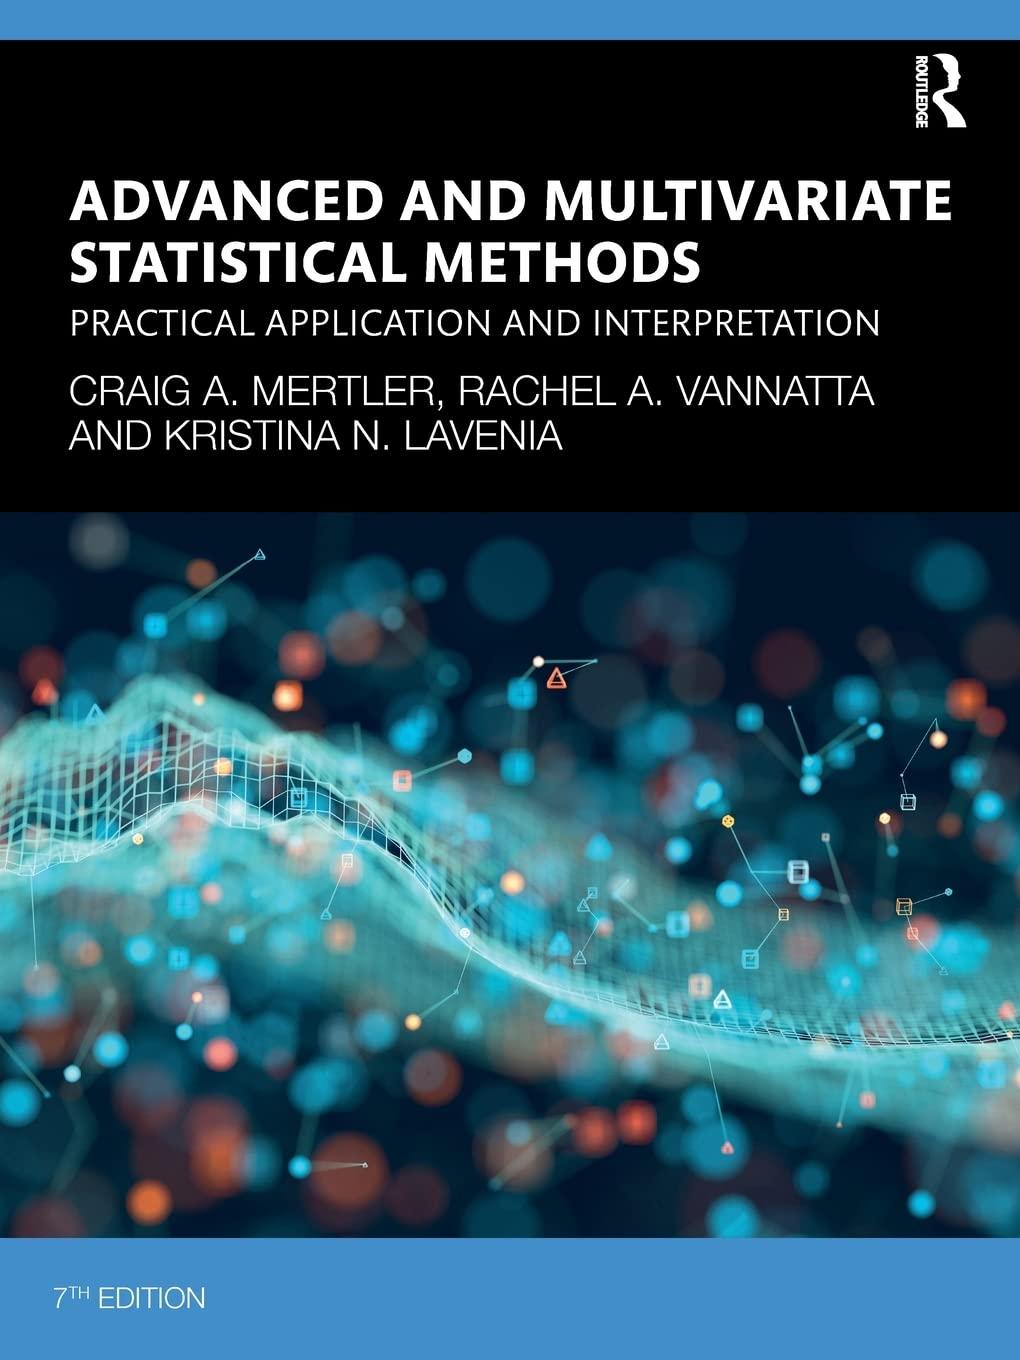 advanced and multivariate statistical methods 7th edition craig a. mertler, rachel a. vannatta, kristina n.